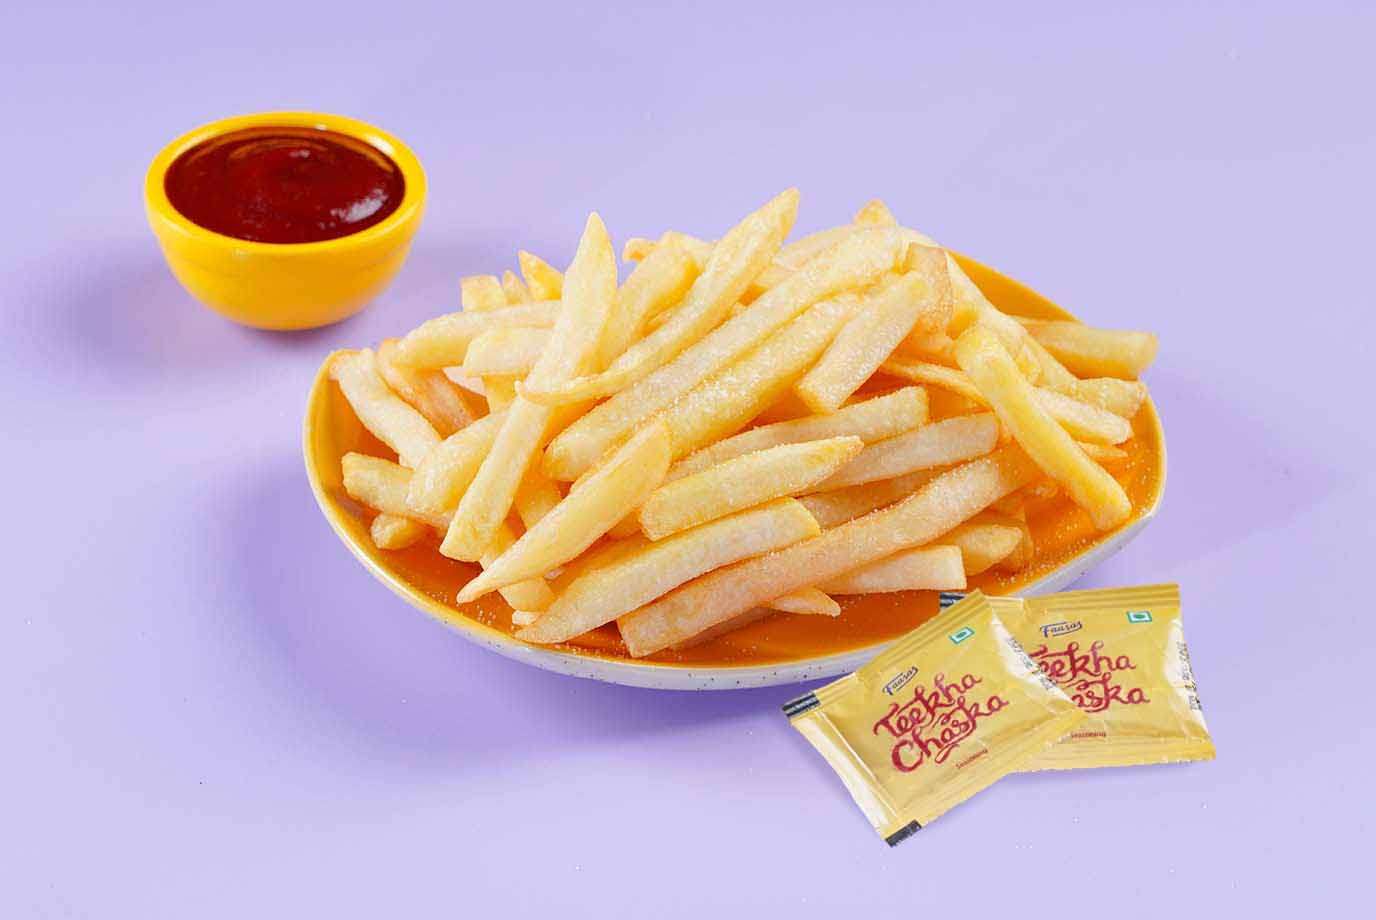 Teekha Chaska French Fries